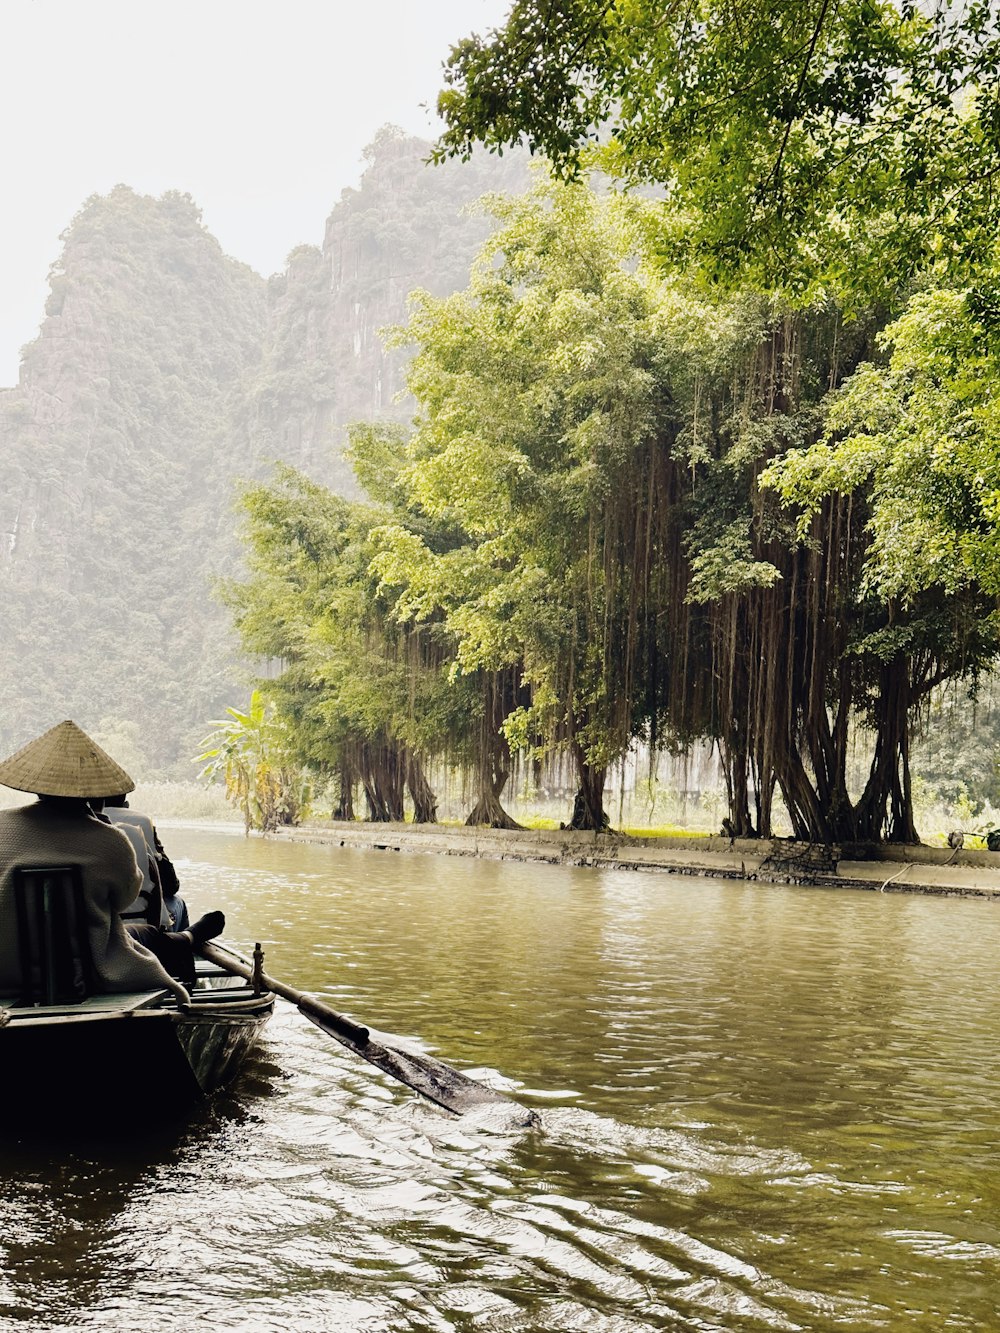 a person riding a boat down a river